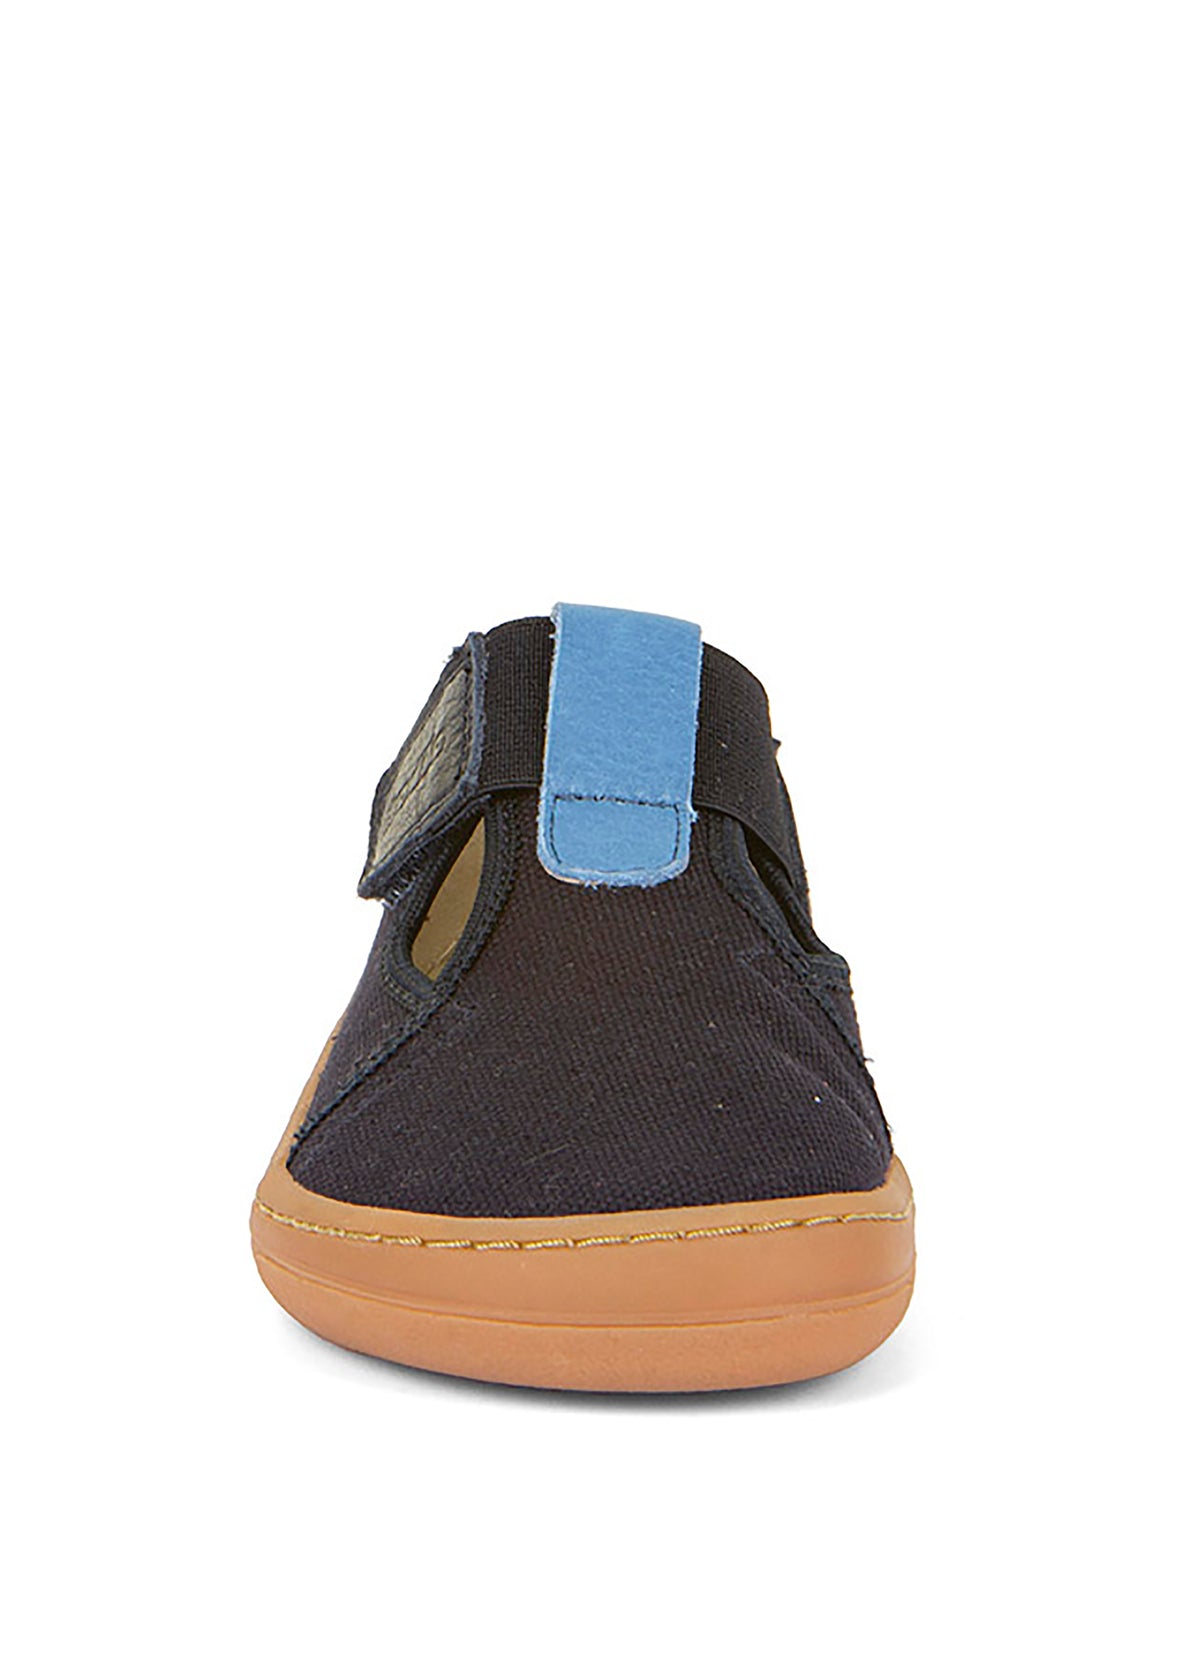 Children's barefoot sneakers - dark blue, velcro fastening